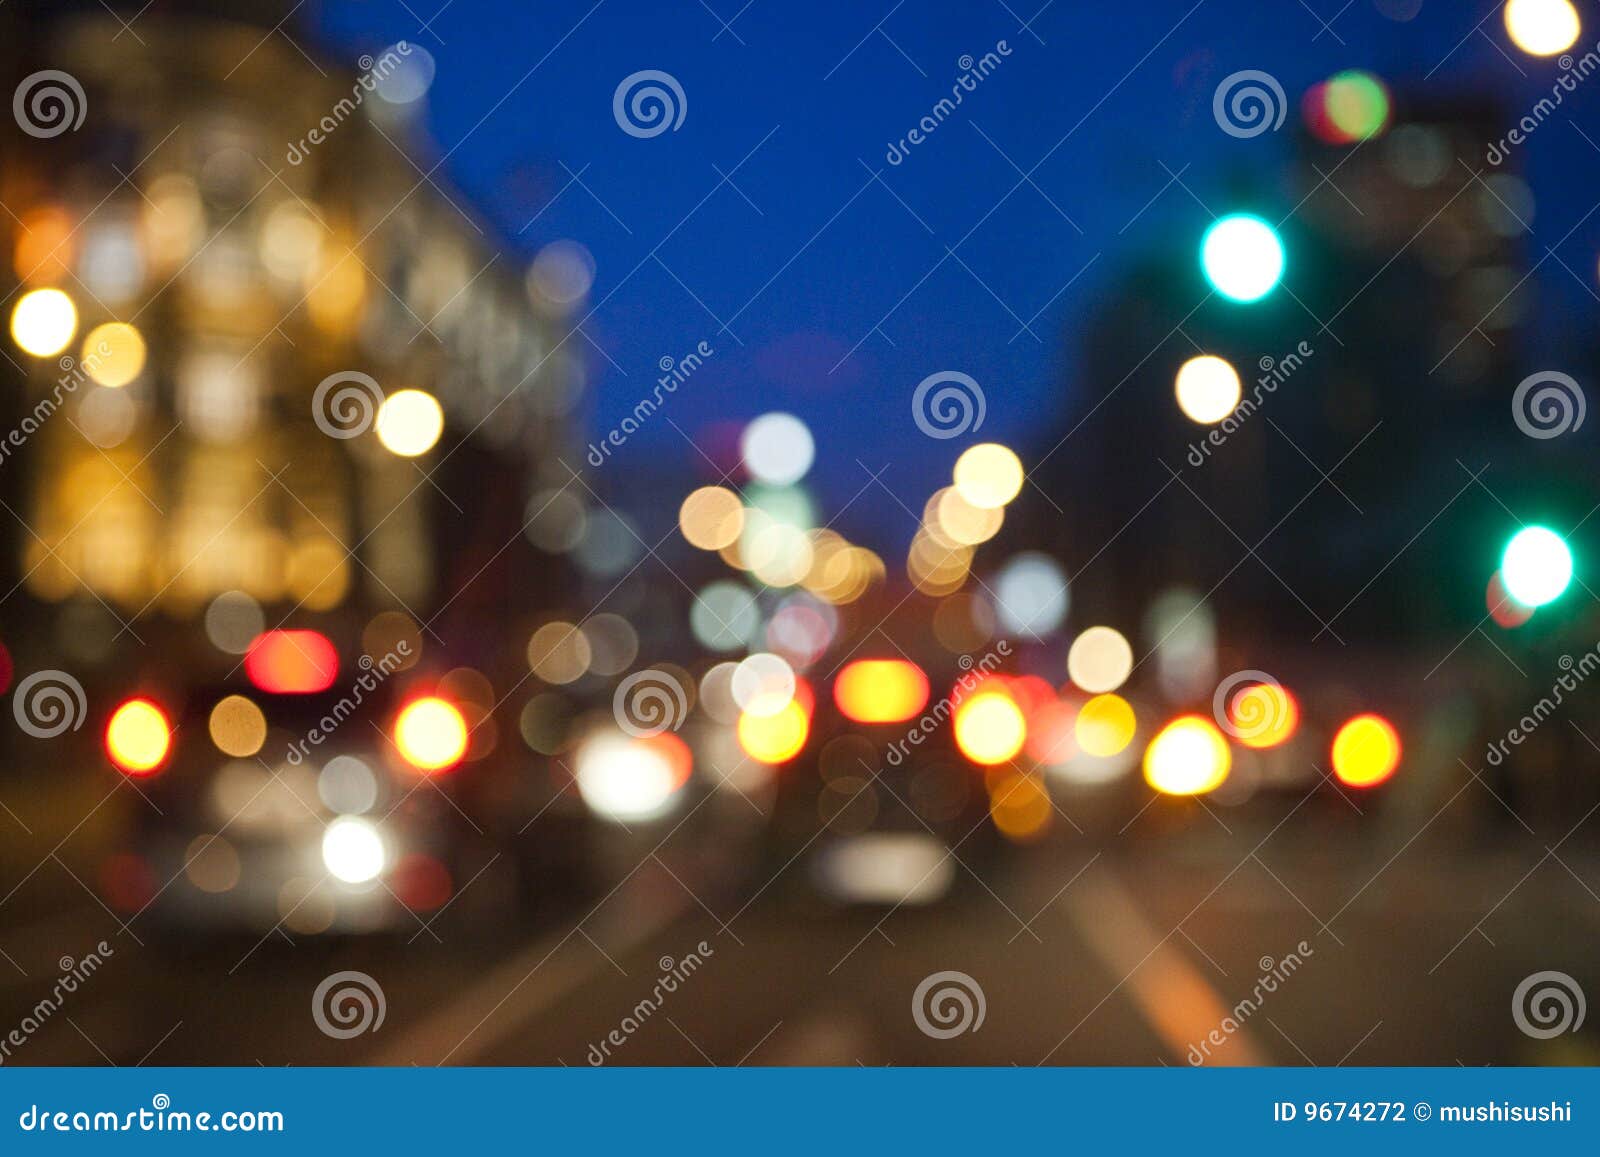 Blurred City Lights Background Stock Photo - Image of romance, energy:  9674272